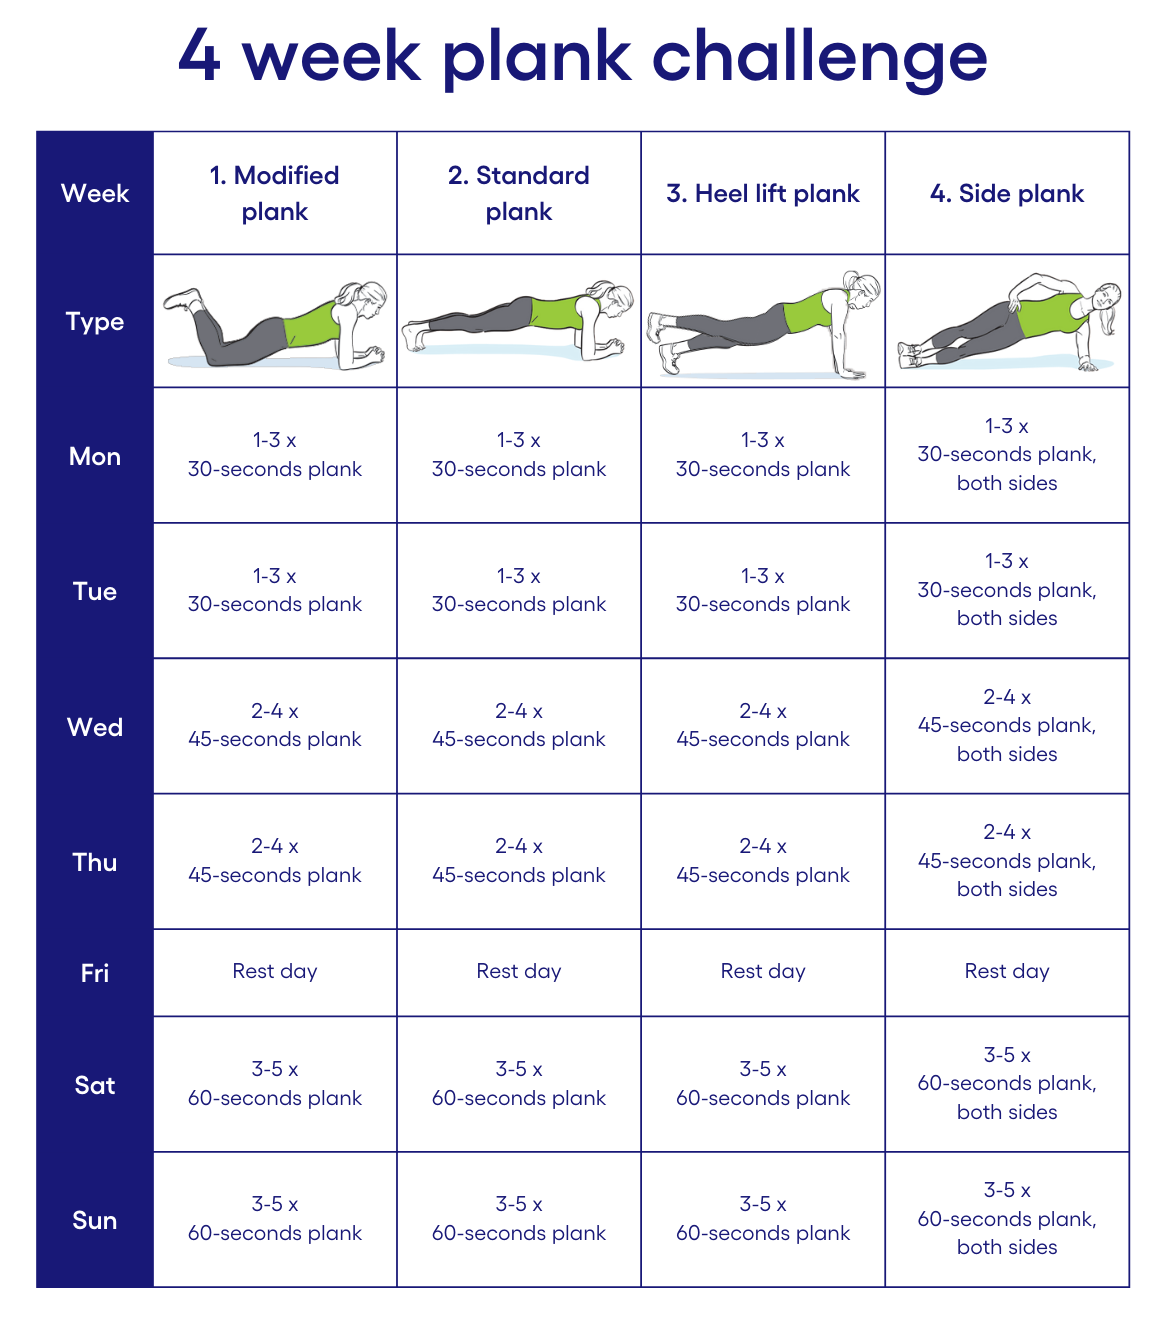 4 week plank challenge